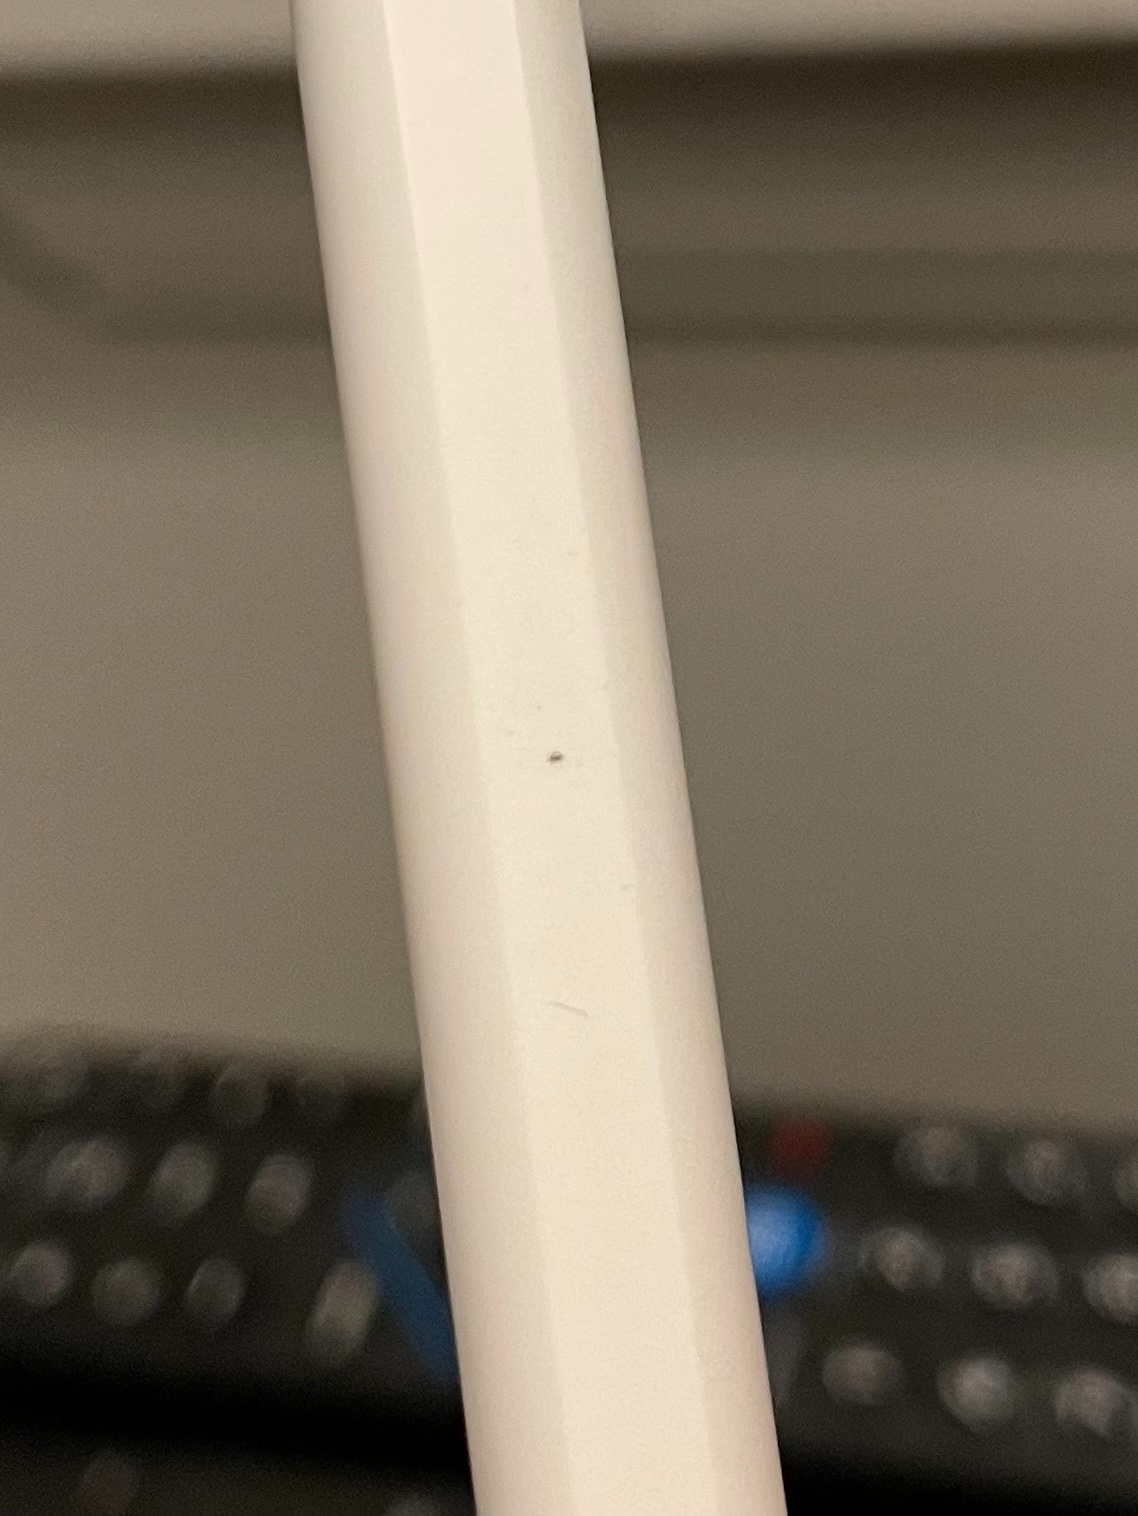 Do Apple pencils get scratched?